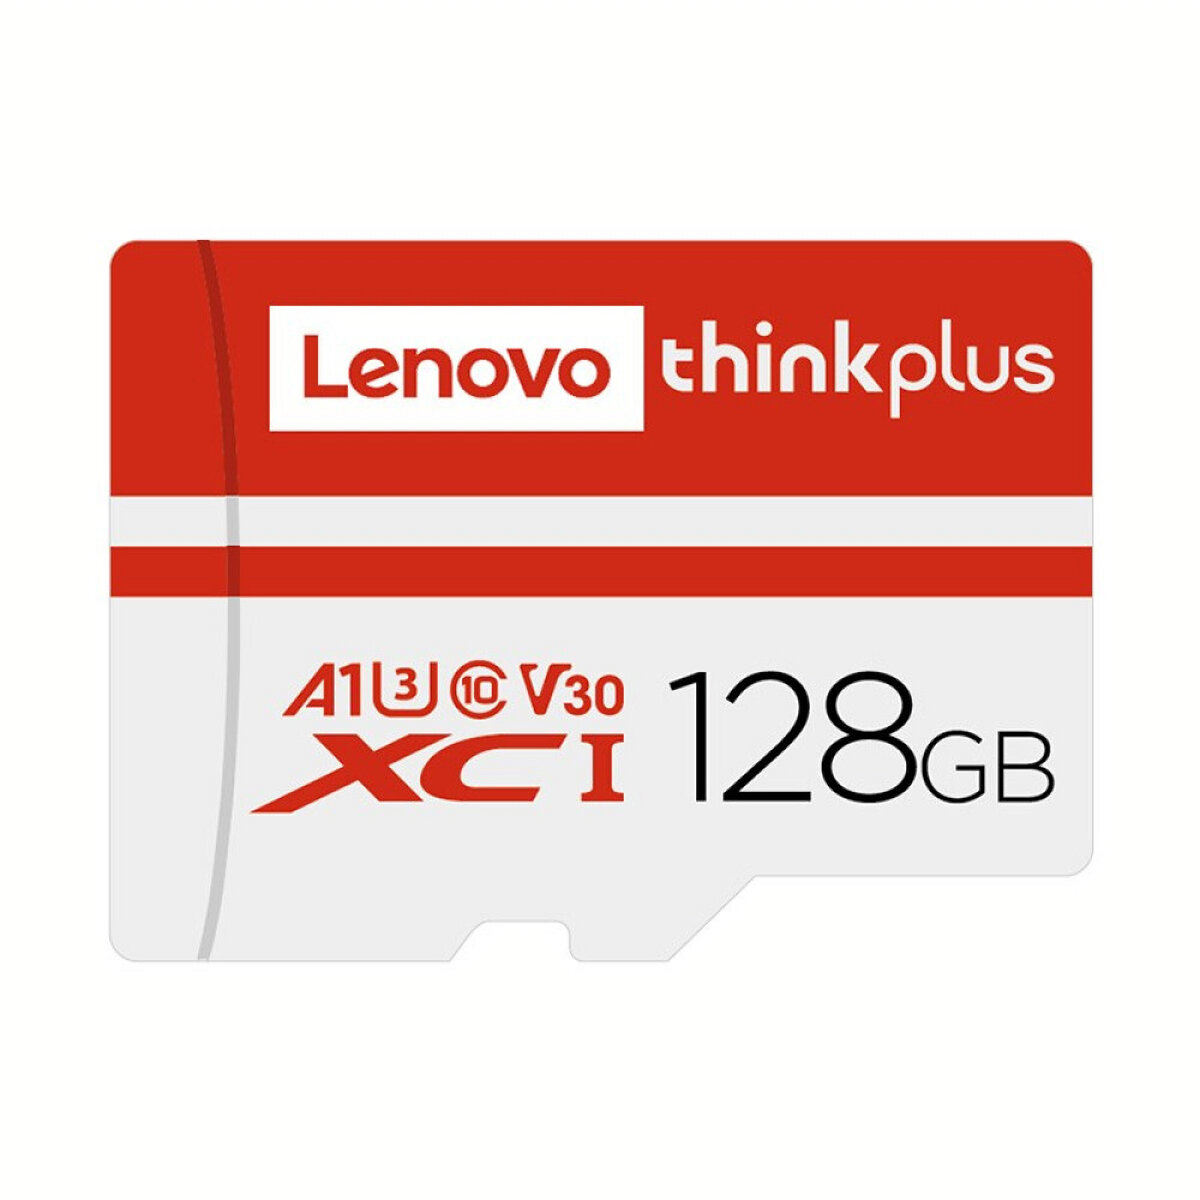 Lenovo thinkplus TF101 TF Card 128GB 64GB 32GB A1 U3 V30 C10 Micro SD Card Read Speed up to 100MB/s 